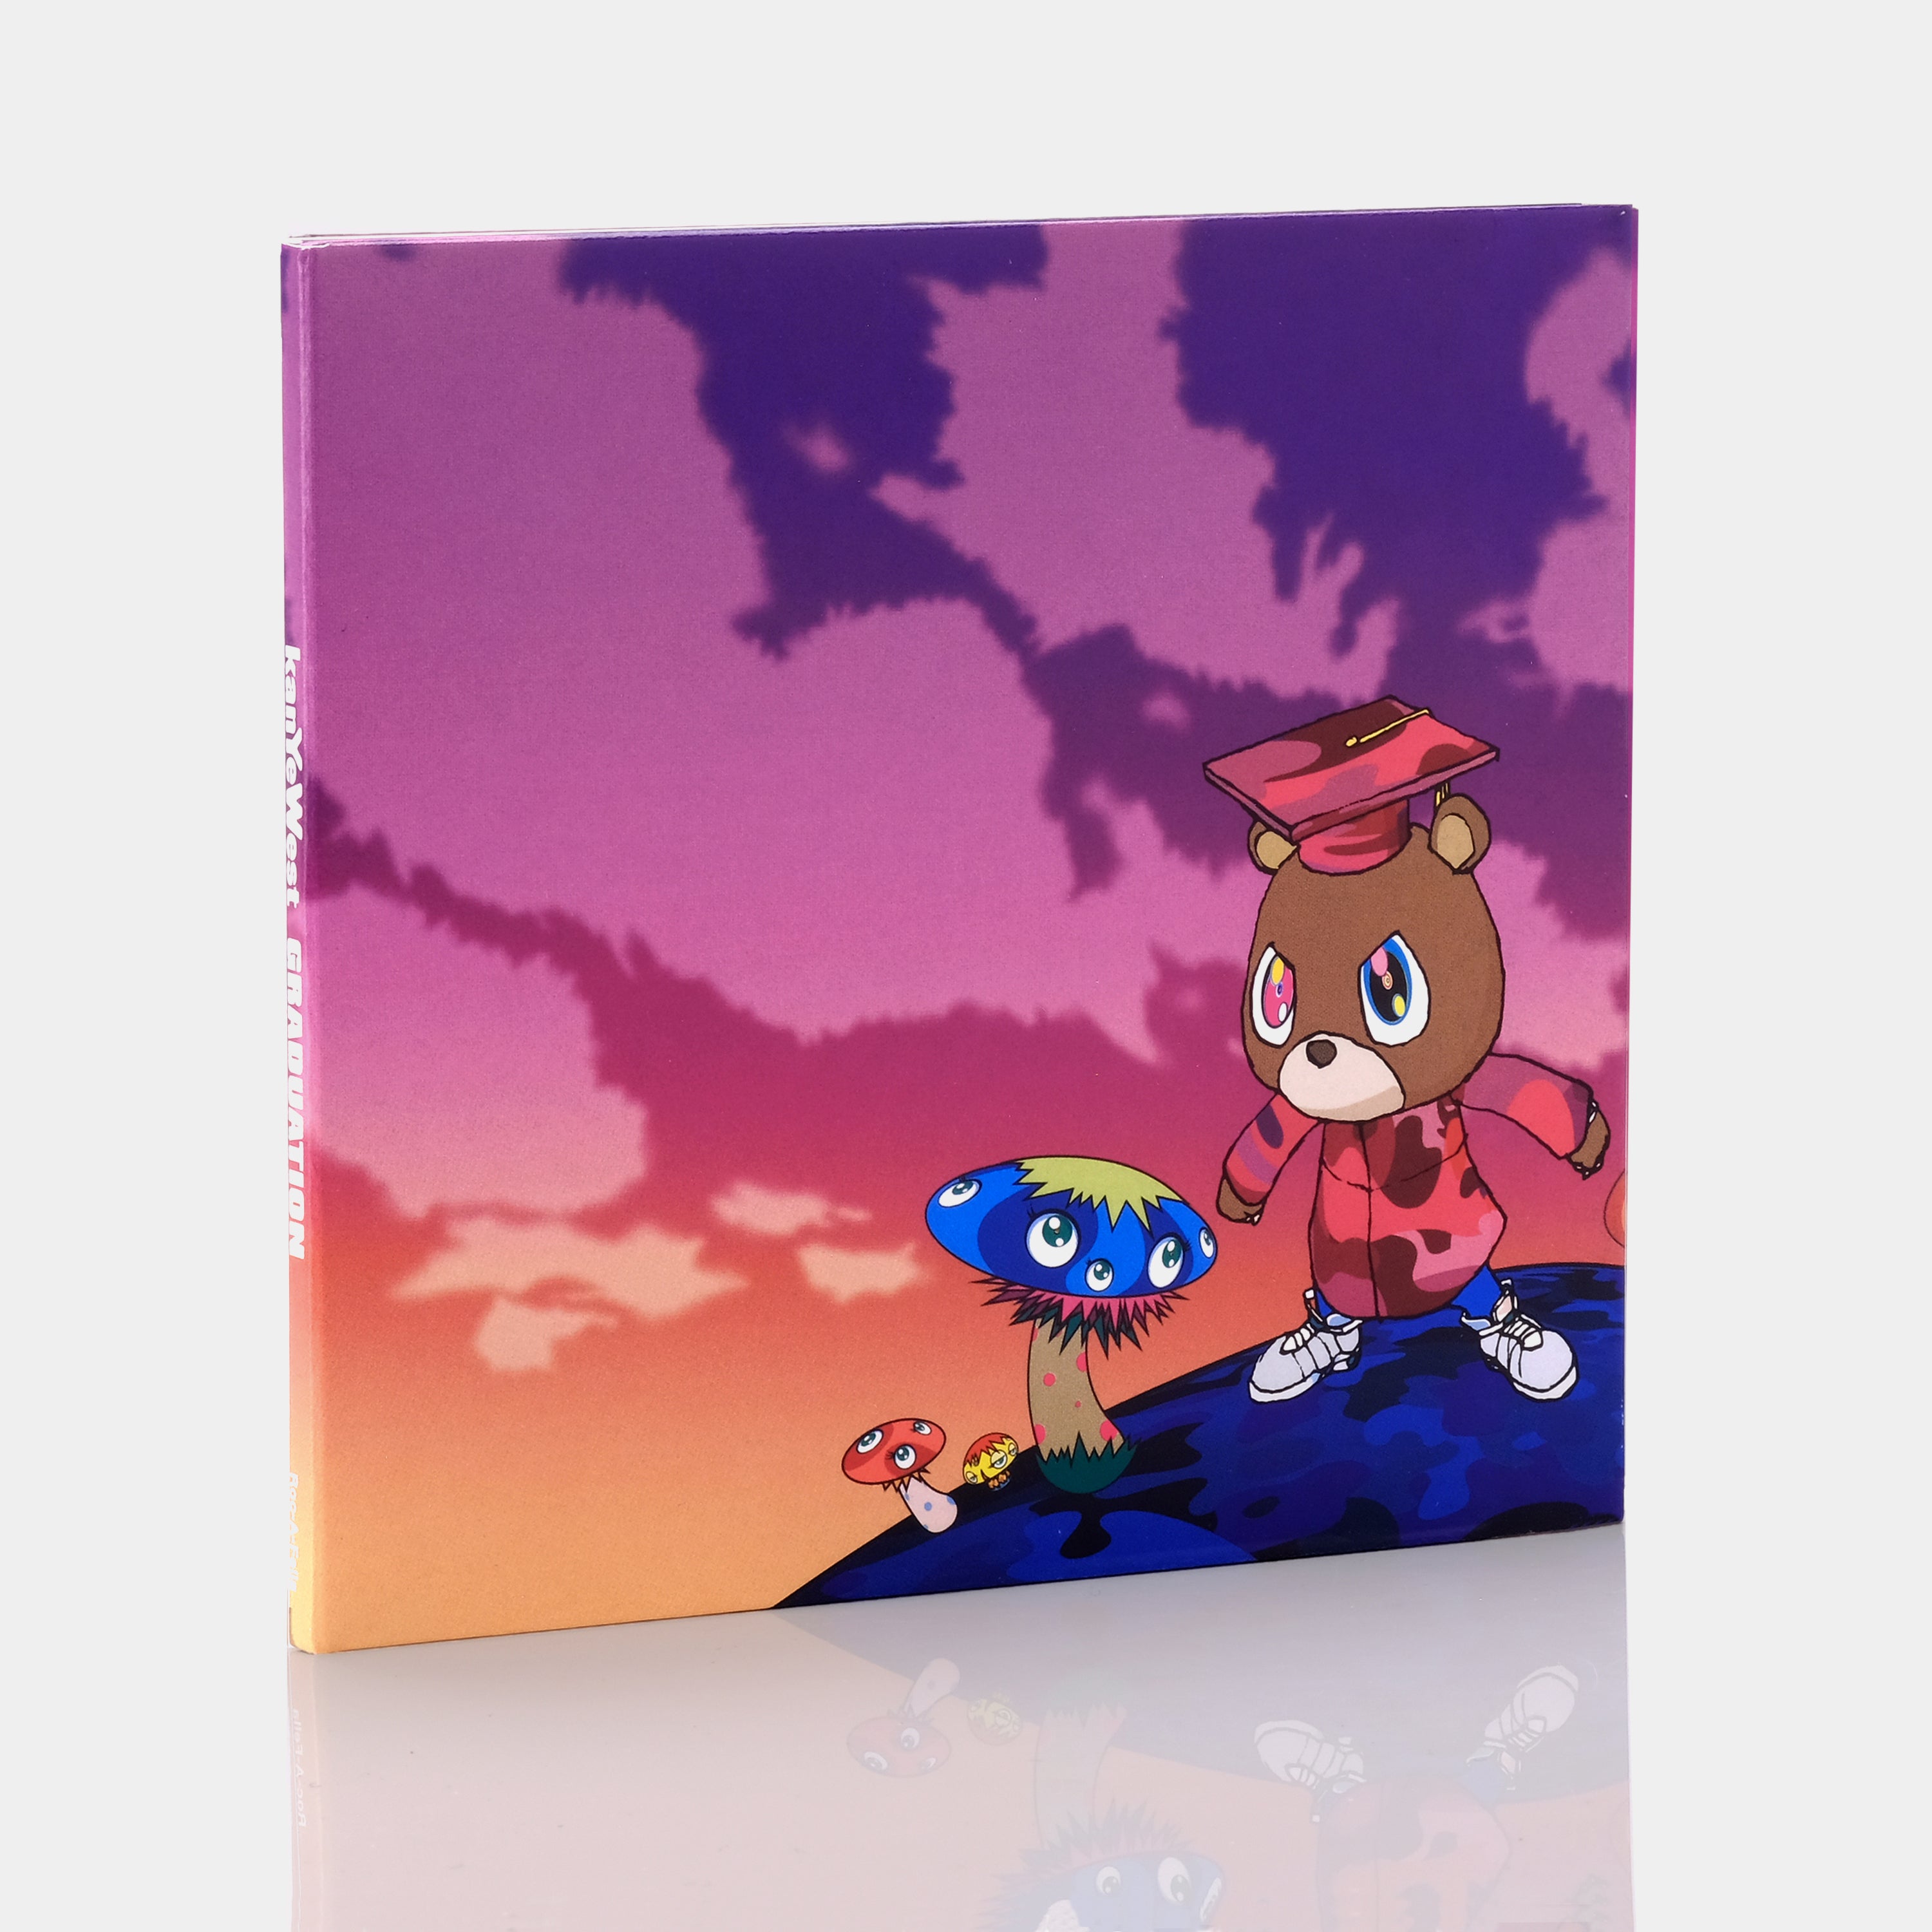 Kanye West - Graduation (Clean) CD